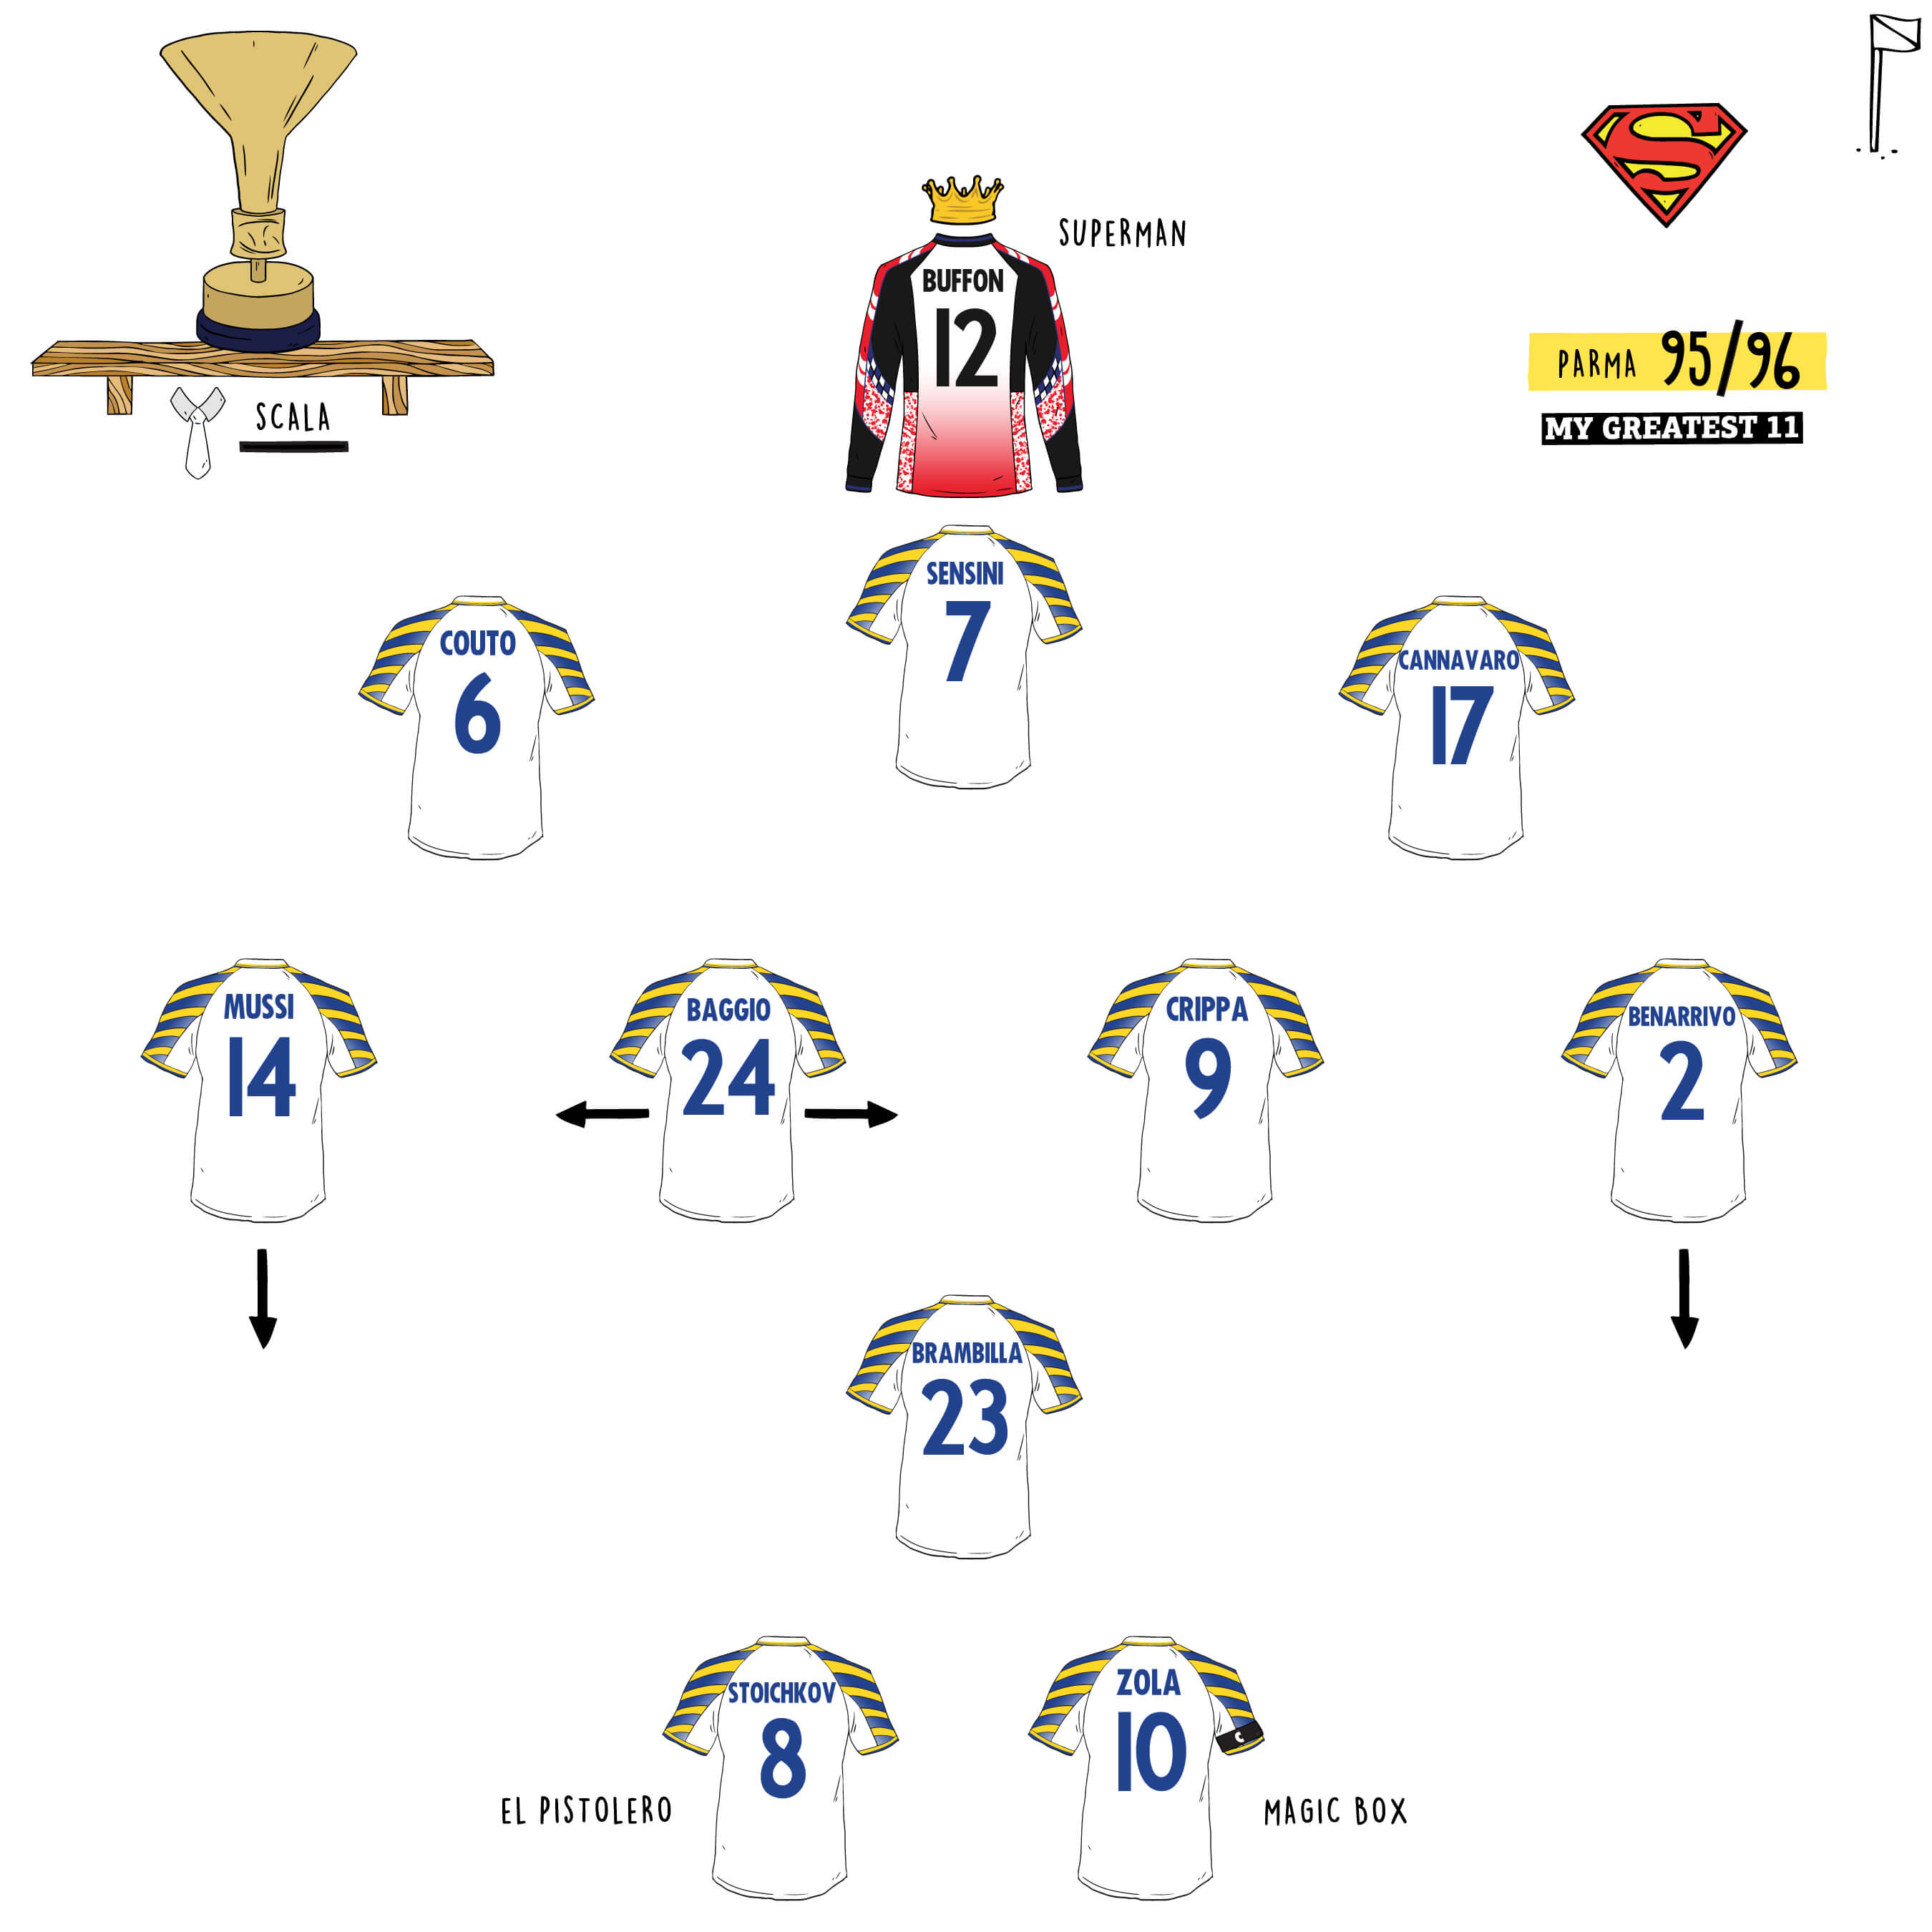 19/11/95 - Parma vs AC Milan  17 Year Old Gigi Buffon Pro Debut